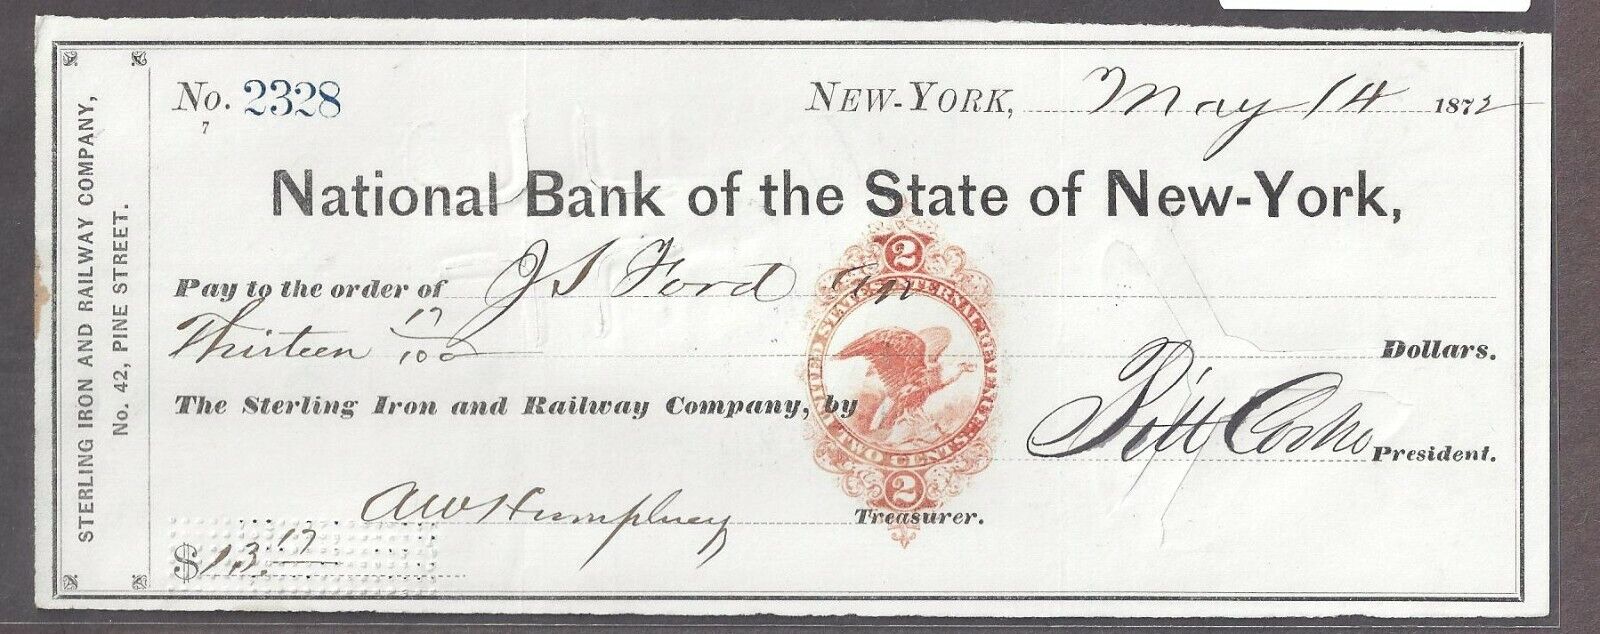 1872 New York City Bank Check RN-H3